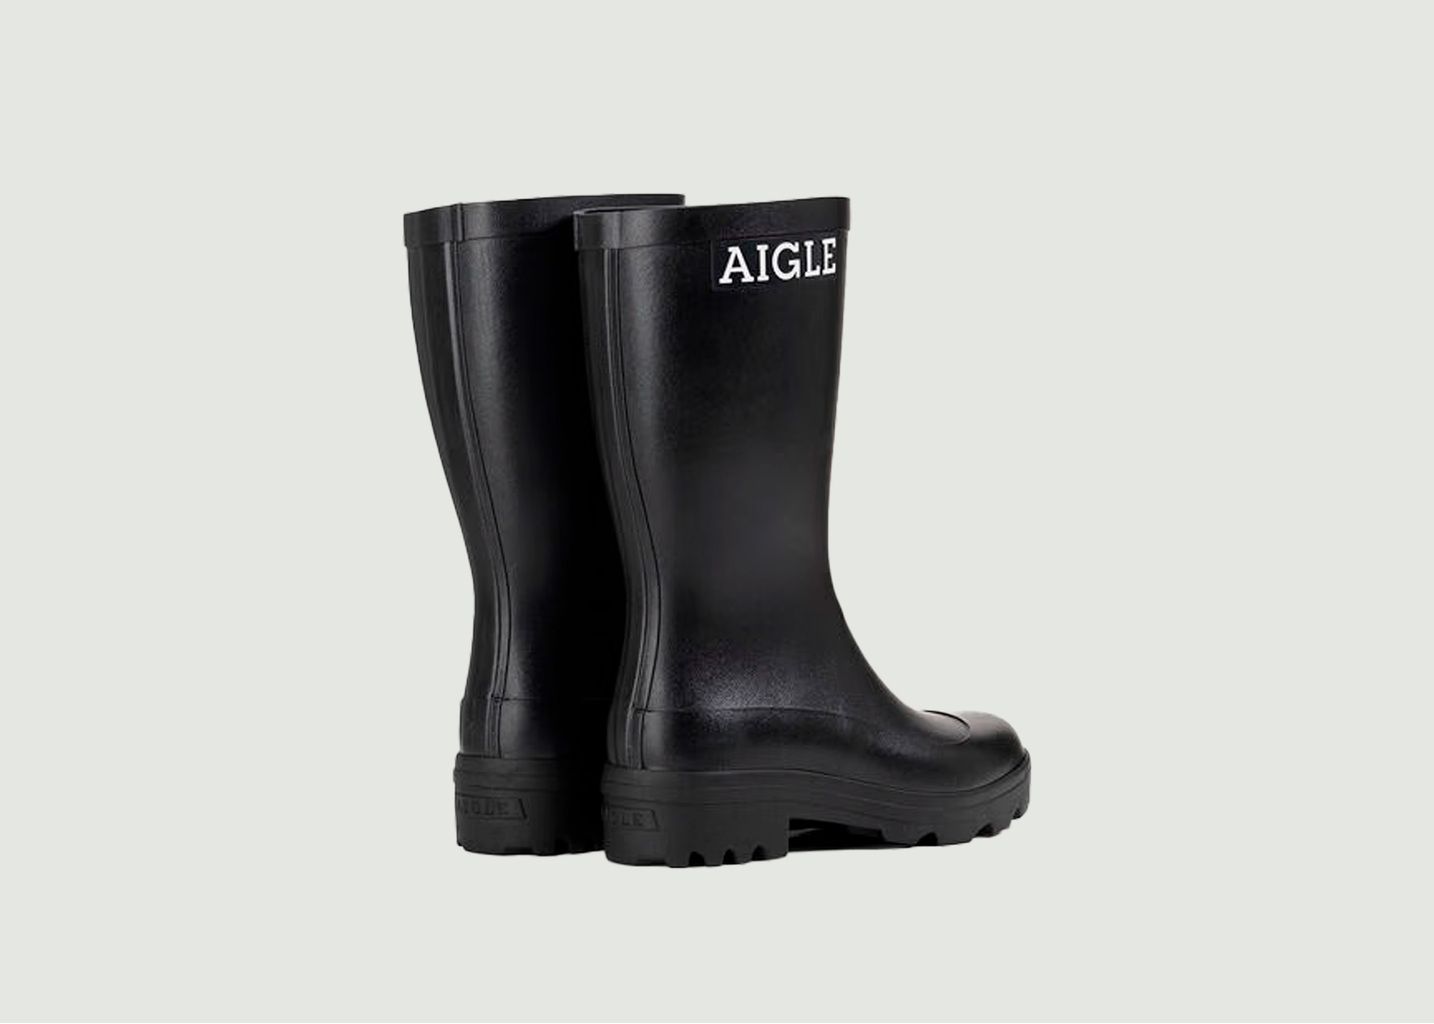 Atelier Aigle boots - Aigle